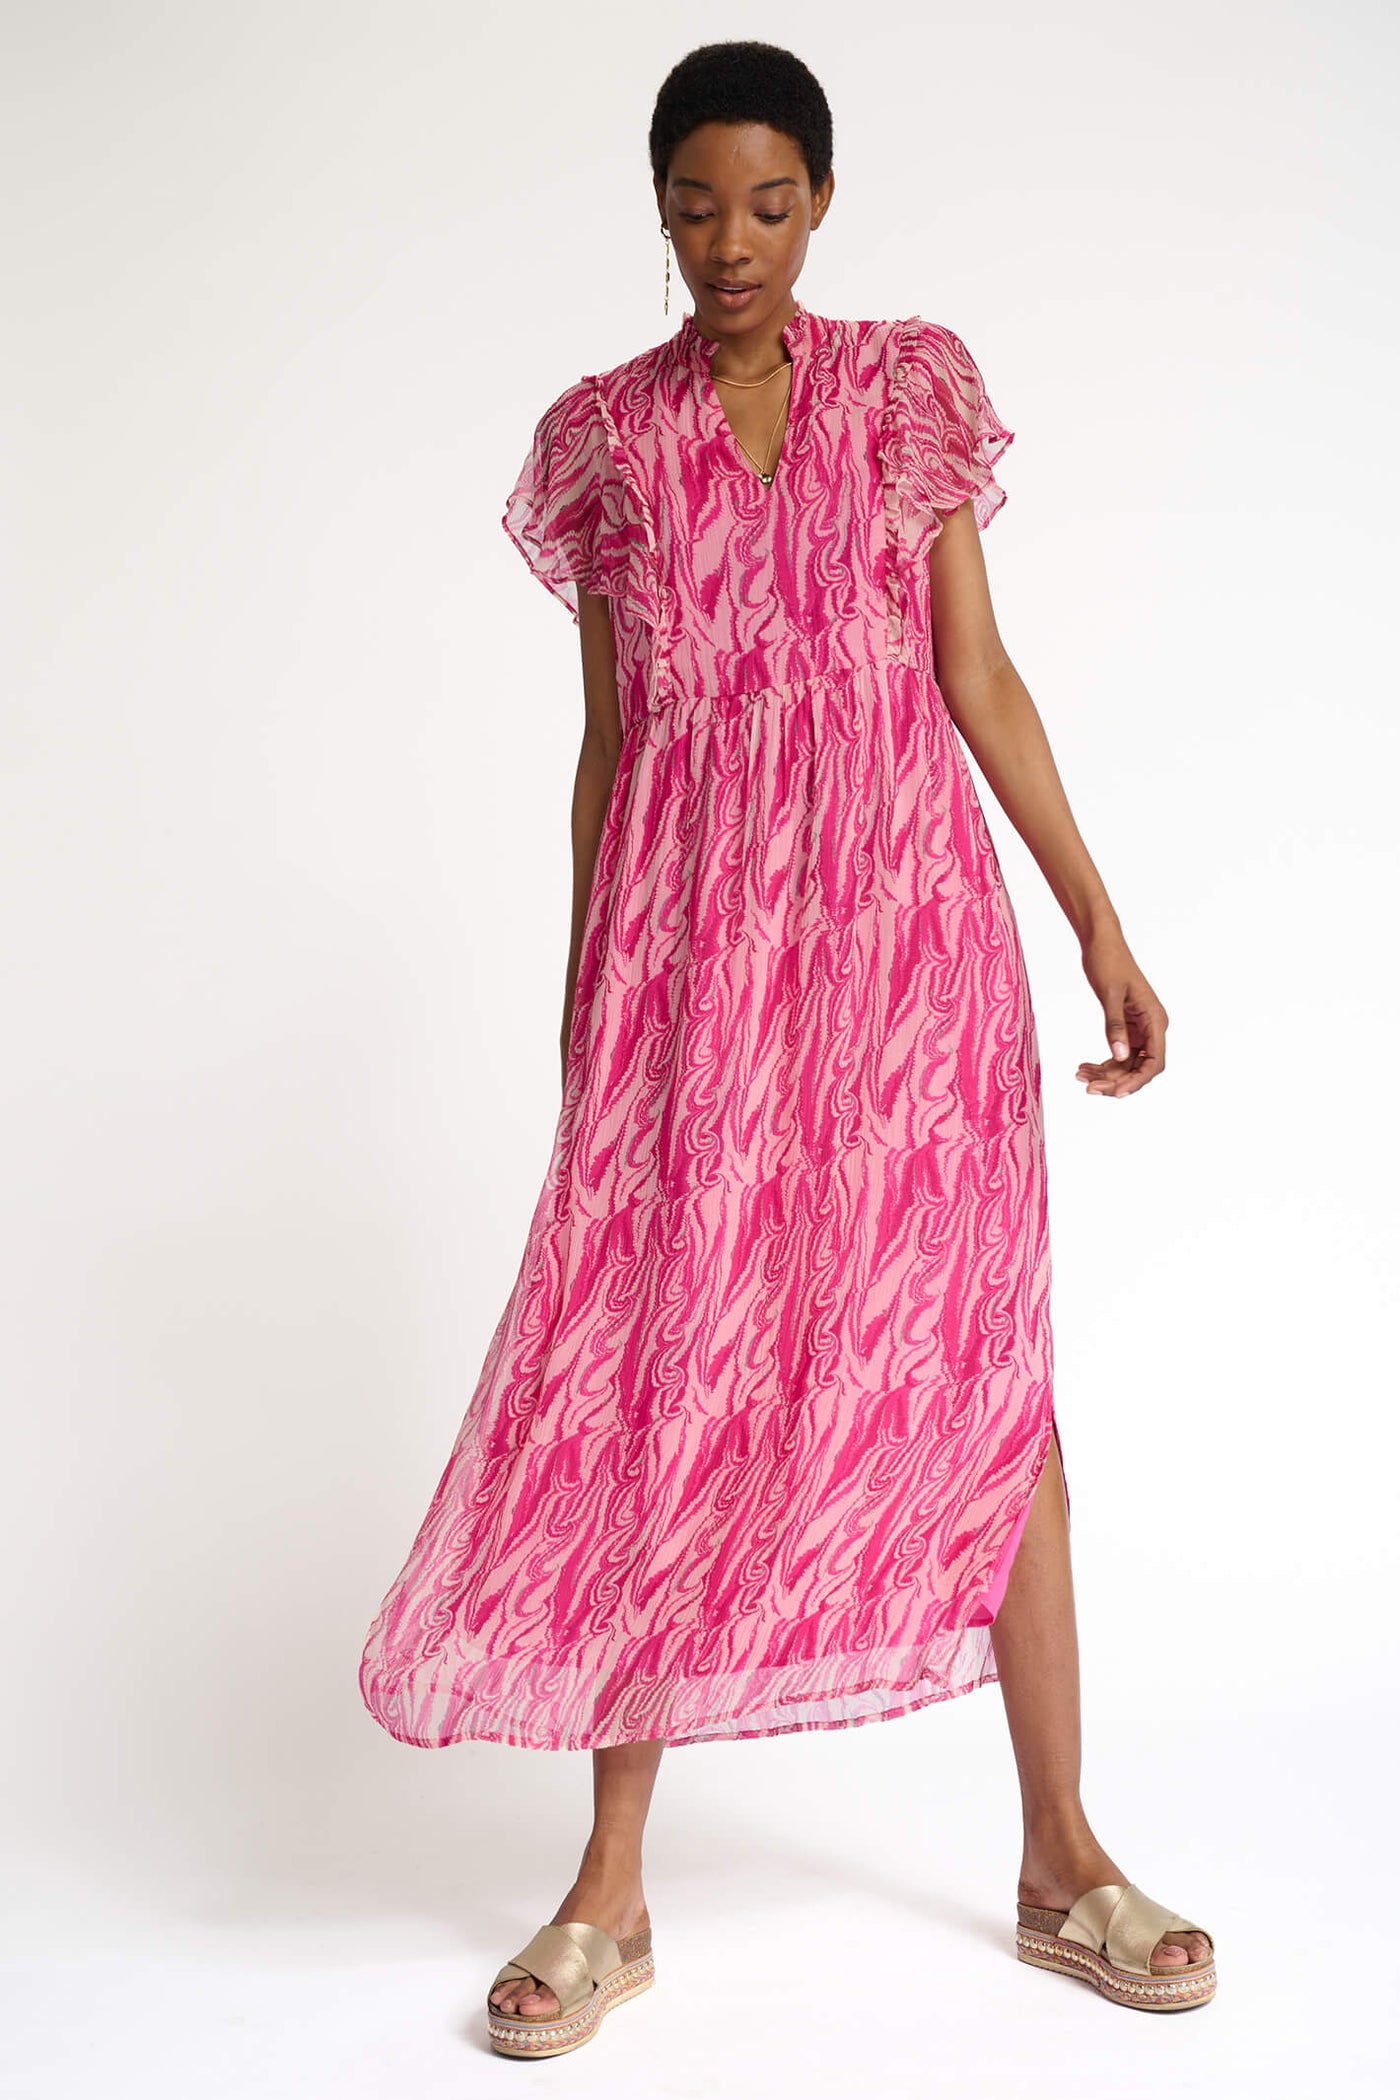 verkopen conjunctie toren POM Amsterdam SP6897 Marmer Mix Fuchsia Dress | Shirley Allum